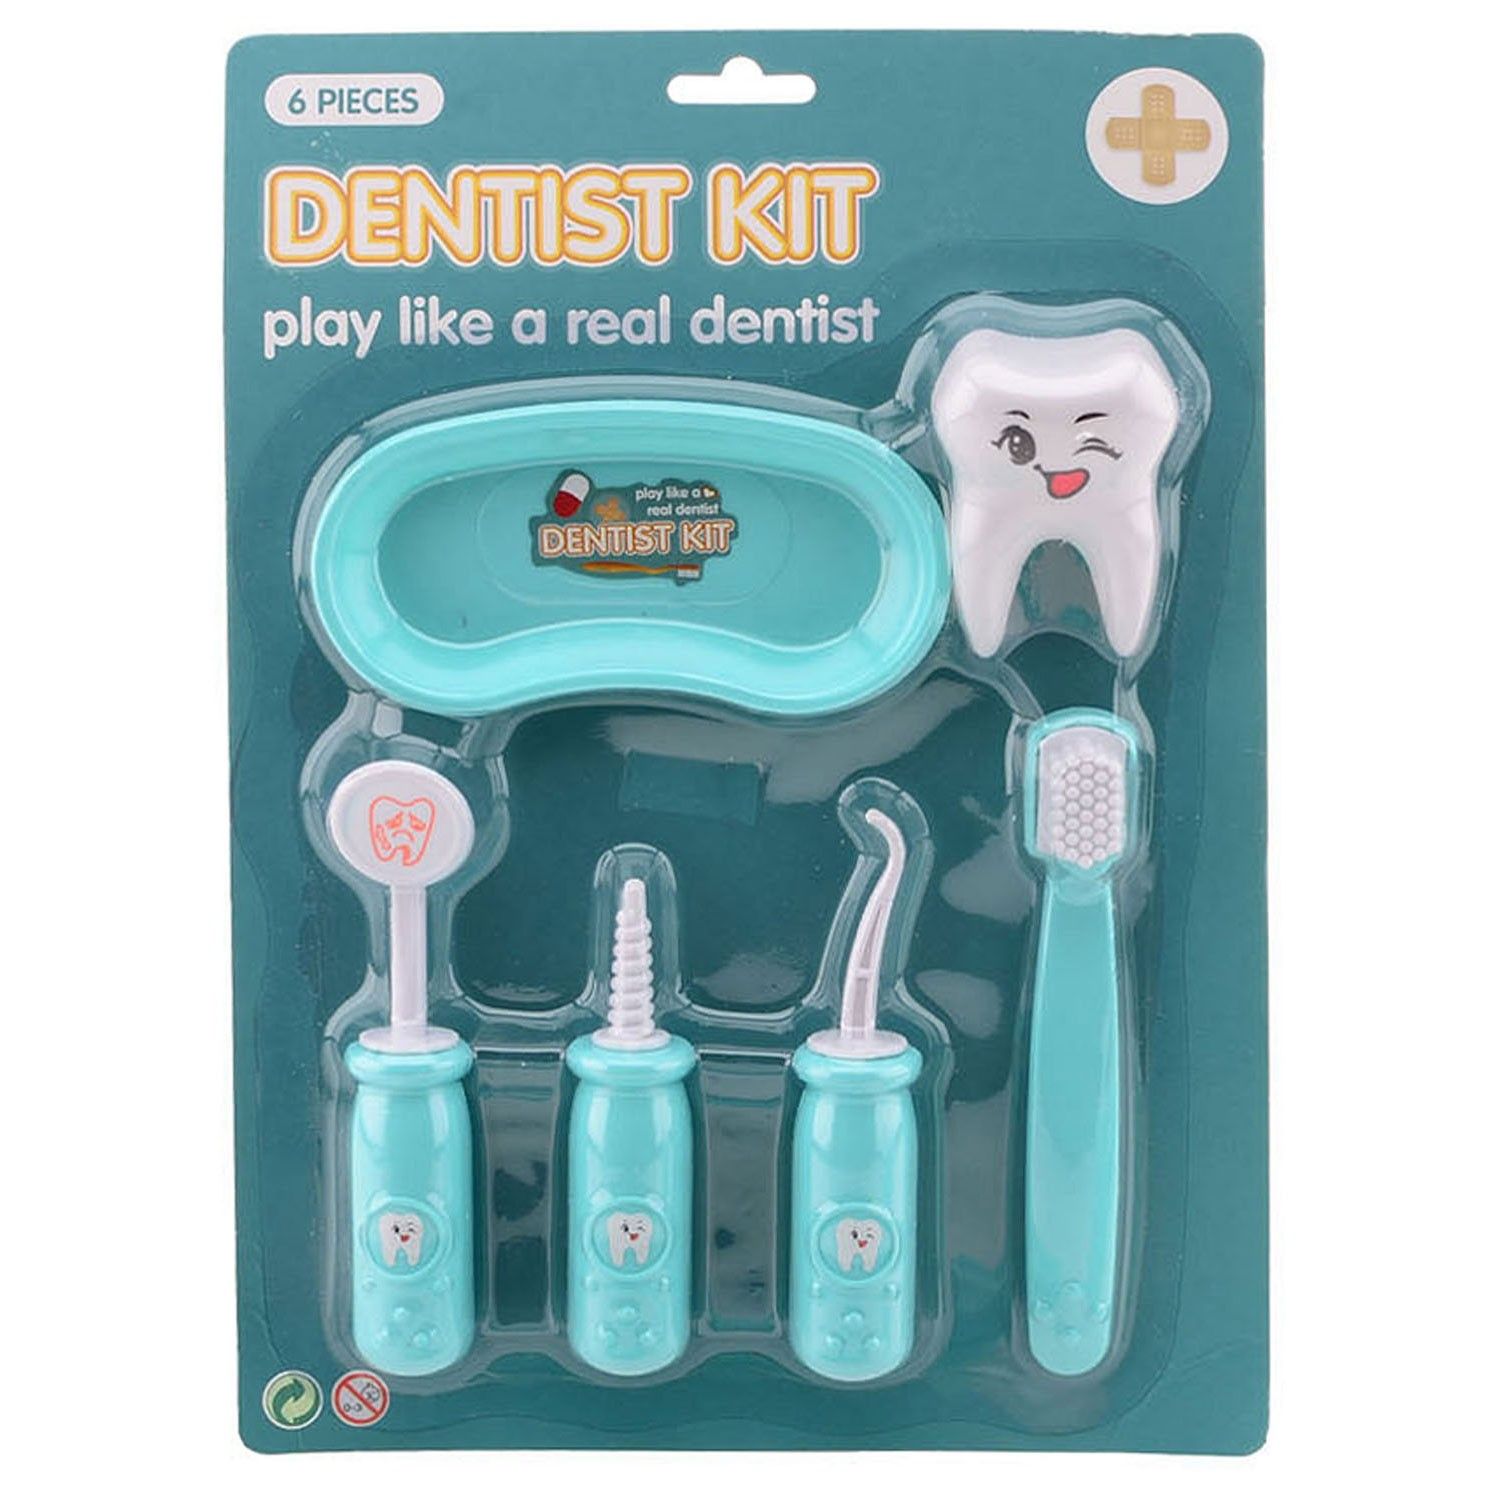 https://www.jouet-plus.com/media/catalog/product/cache/b53f5701c29652b6c3eaff90fe1214f0/image/7281cf04/jouet-plus-kit-de-dentiste-6-pcs.jpg